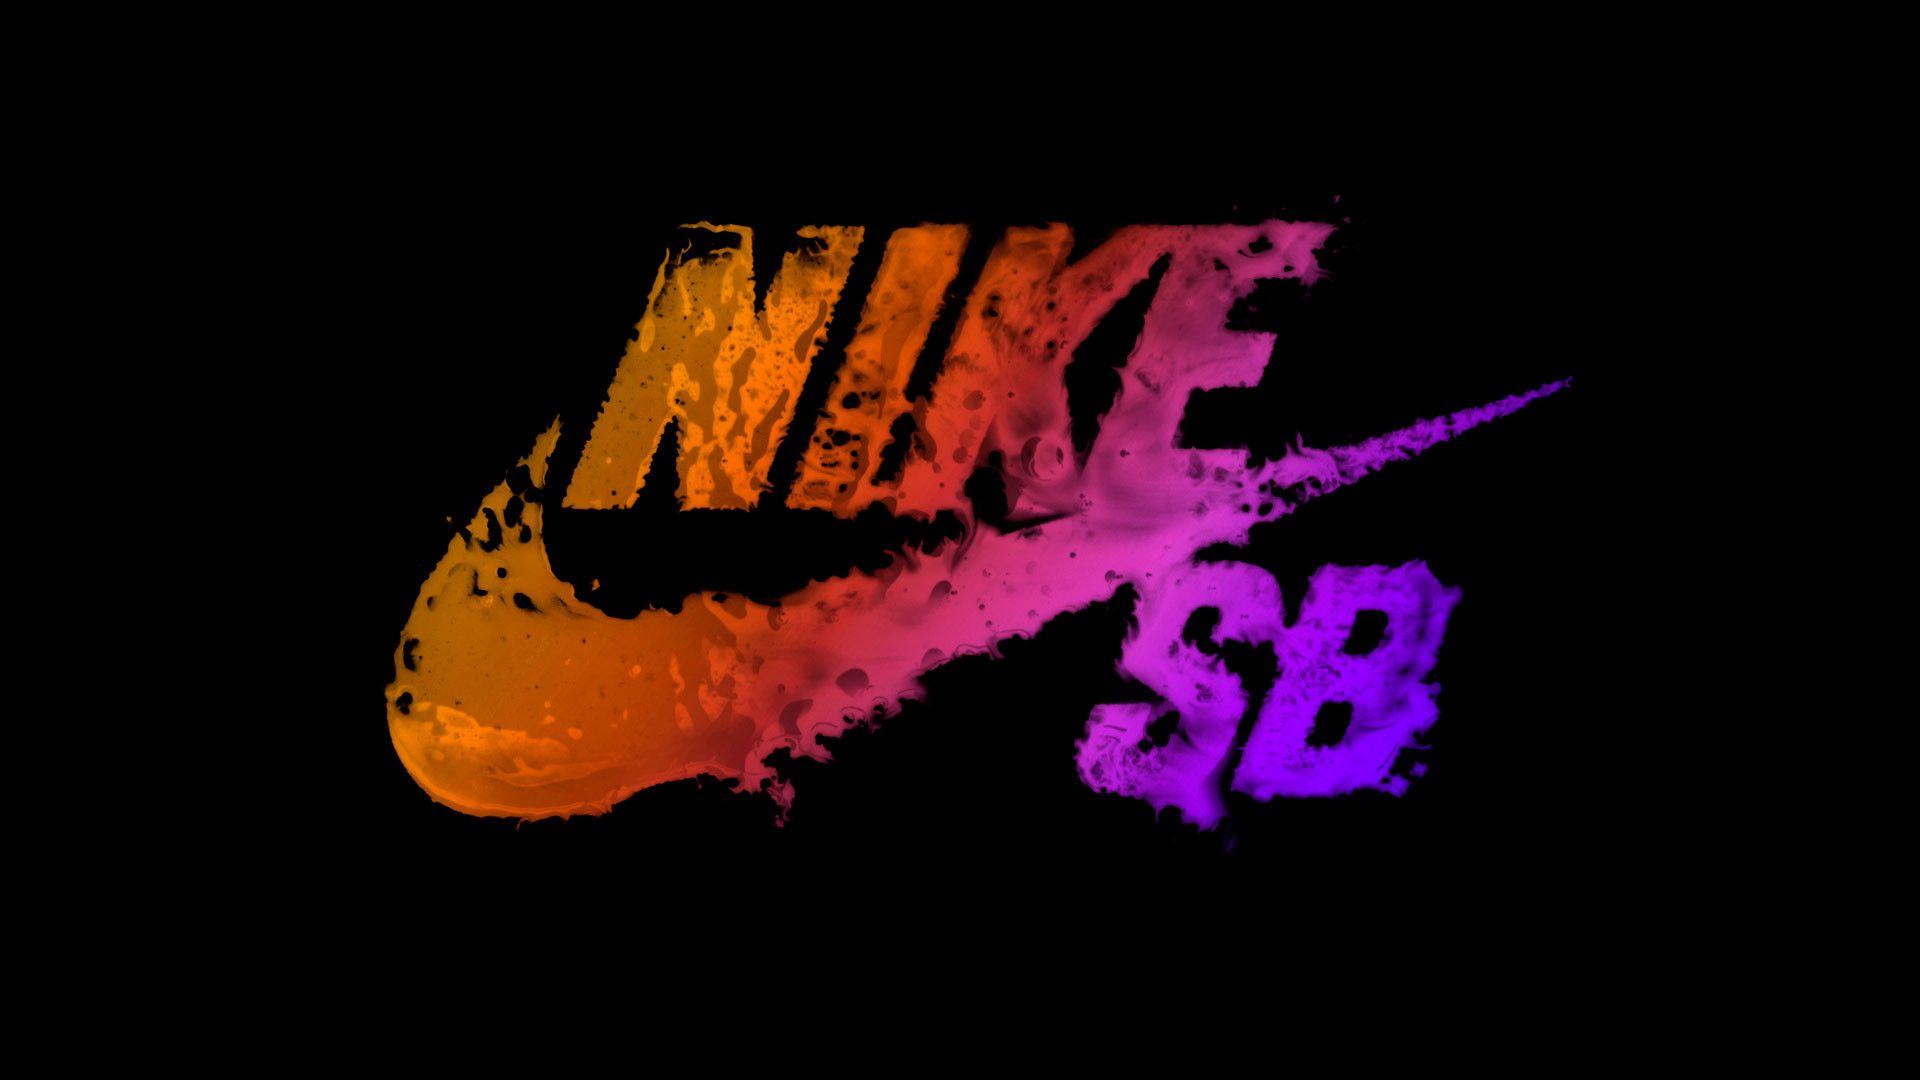 Nike Sb Logo Wallpapers Top Free Nike Sb Logo Backgrounds Wallpaperaccess